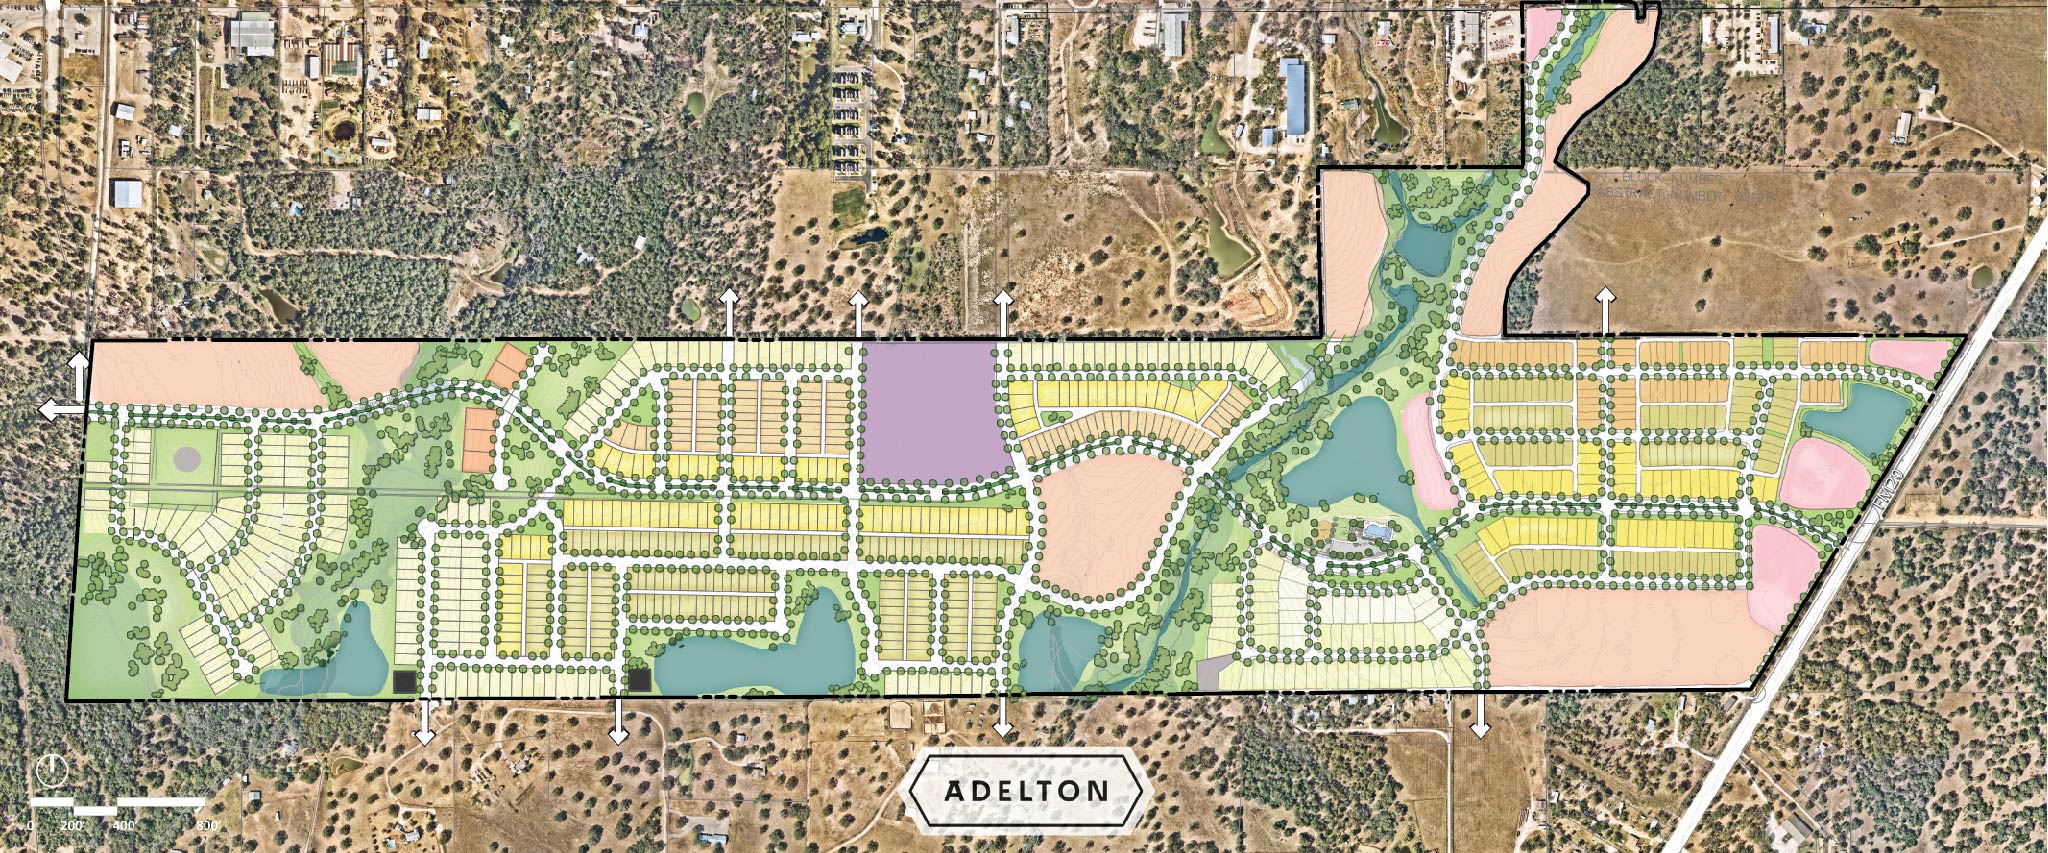 Adelton Bastrop, Texas Community Site Plan